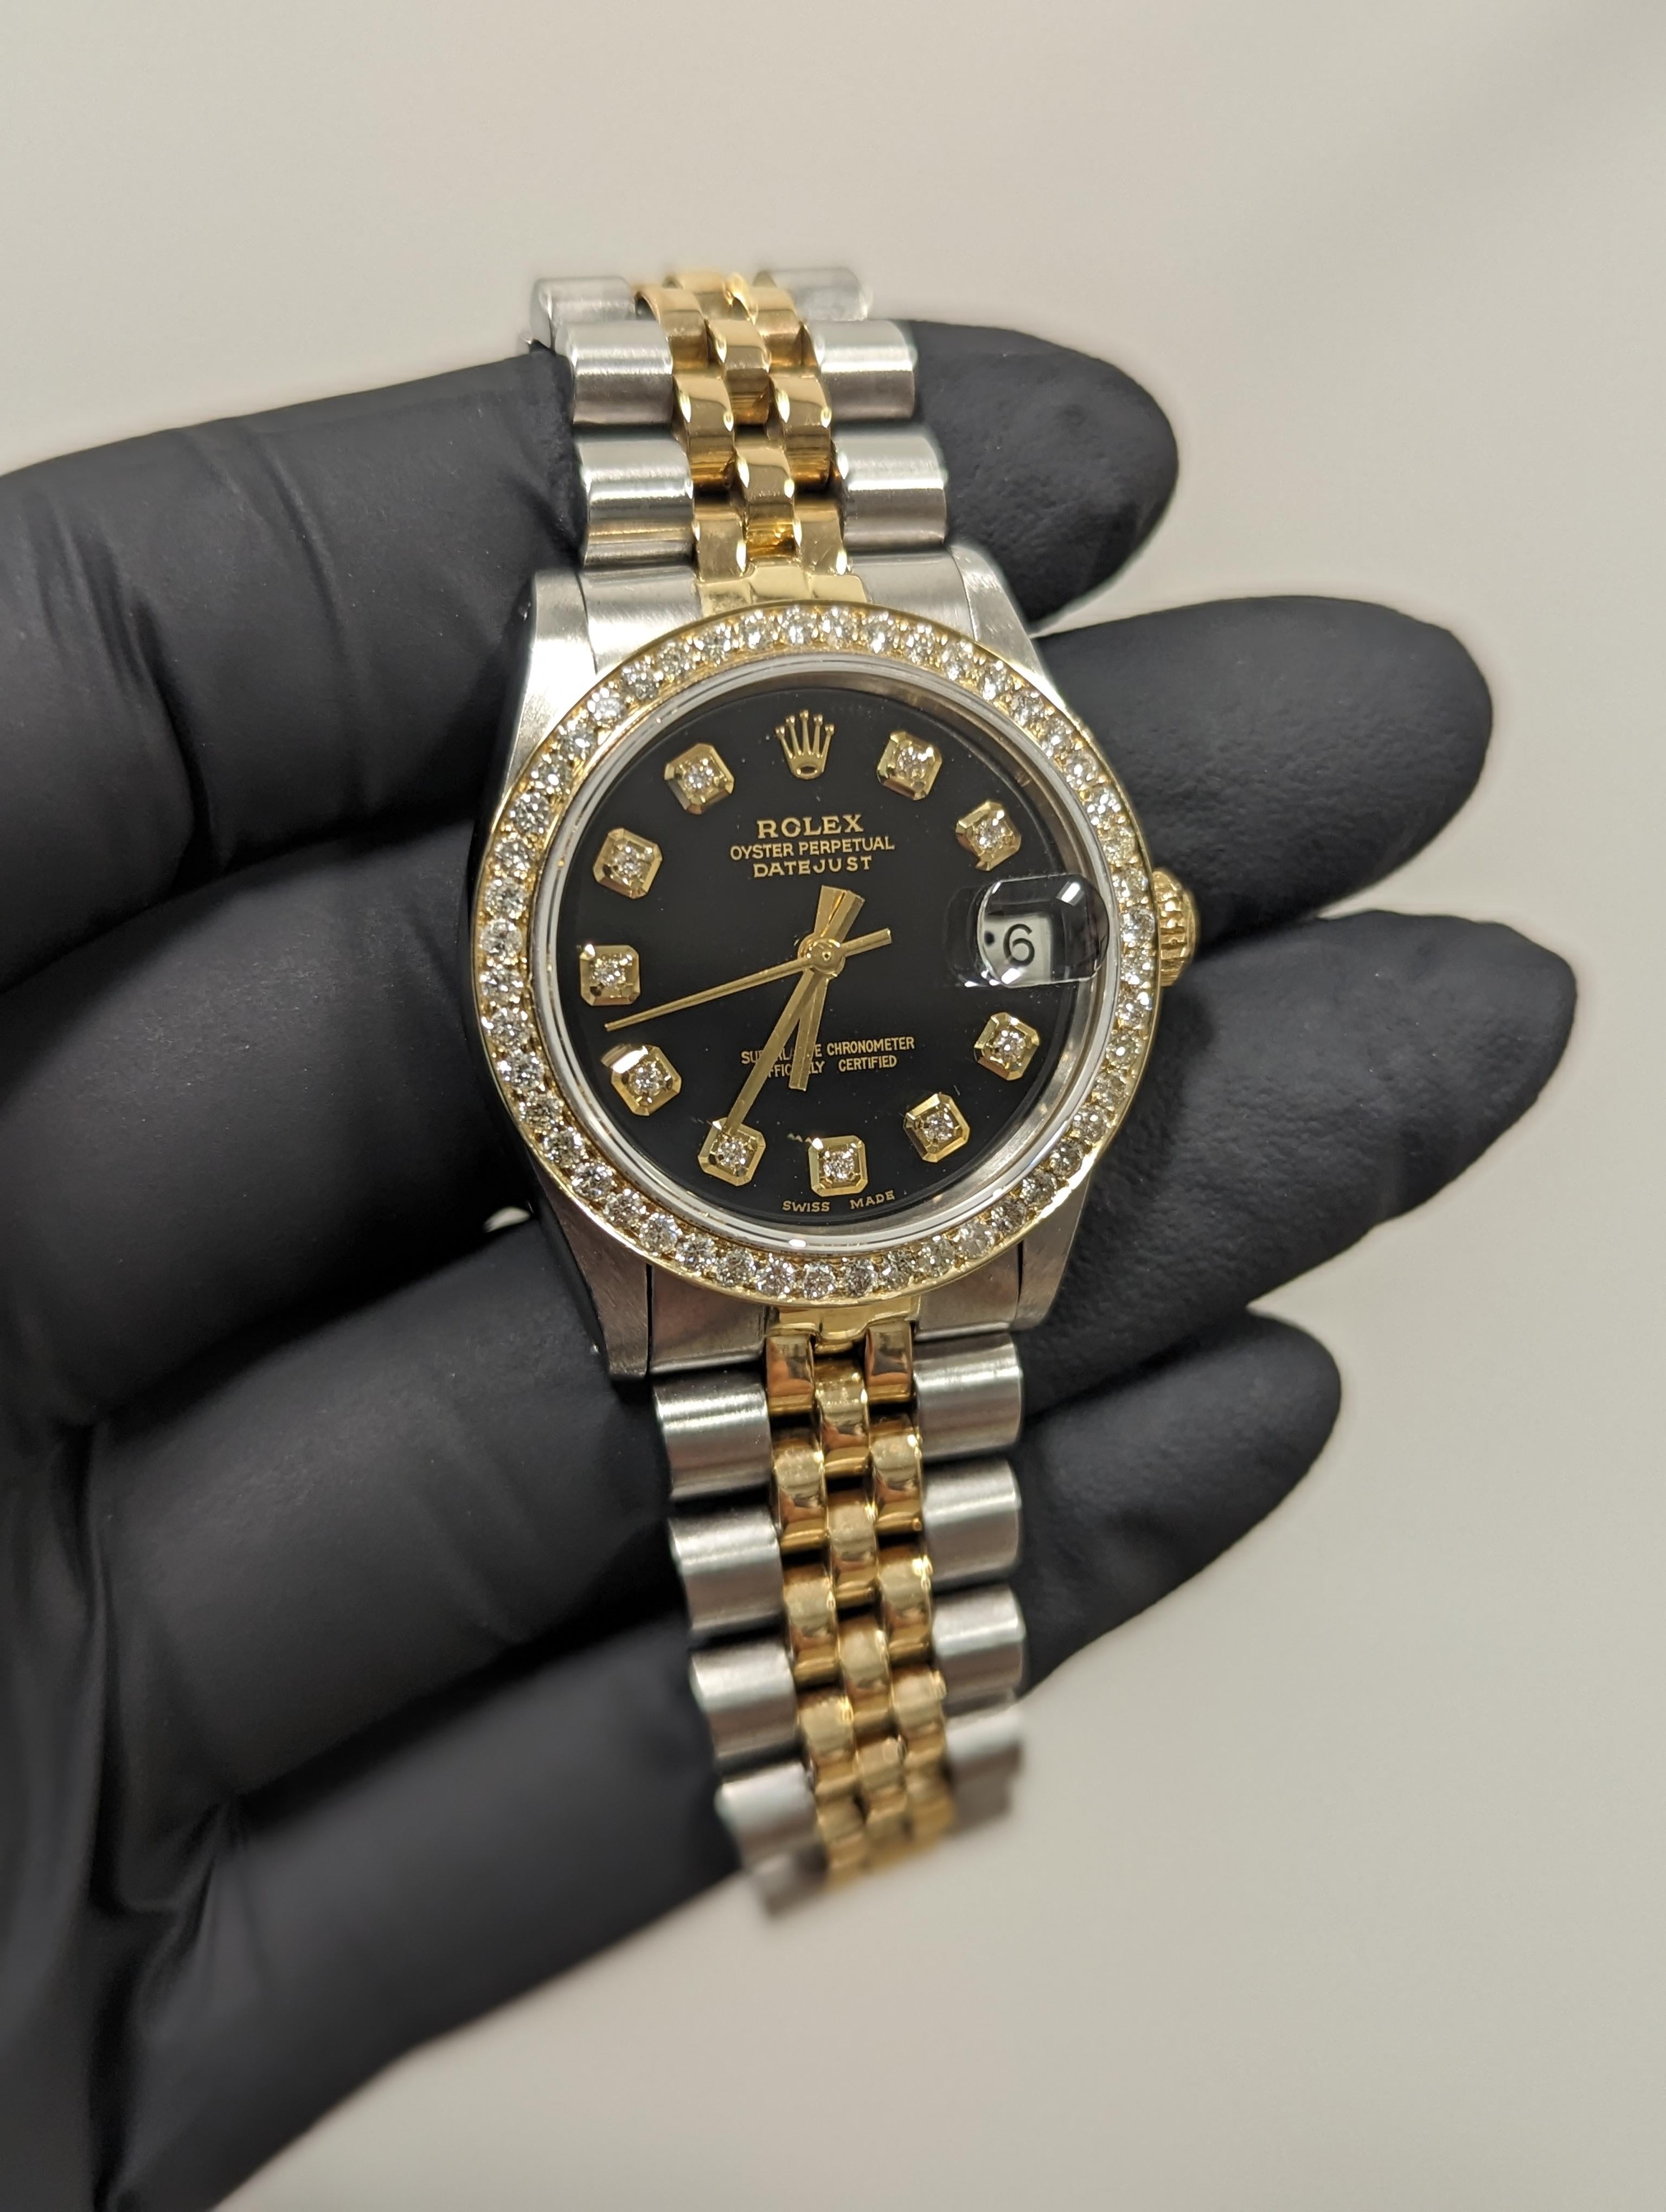 Swiss Wrist - SKU 6827-TT-BLK-DIA-AM-BDS-JBL

Brand : Rolex
Model : Datejust Ref# 6827 - Non-Quickset Model 
Gender : Unisex
Metals : 14K Yellow Gold/ Stainless Steel
Case Size : 31 mm
Dial : Custom Black Diamond Dial (This dial is not original